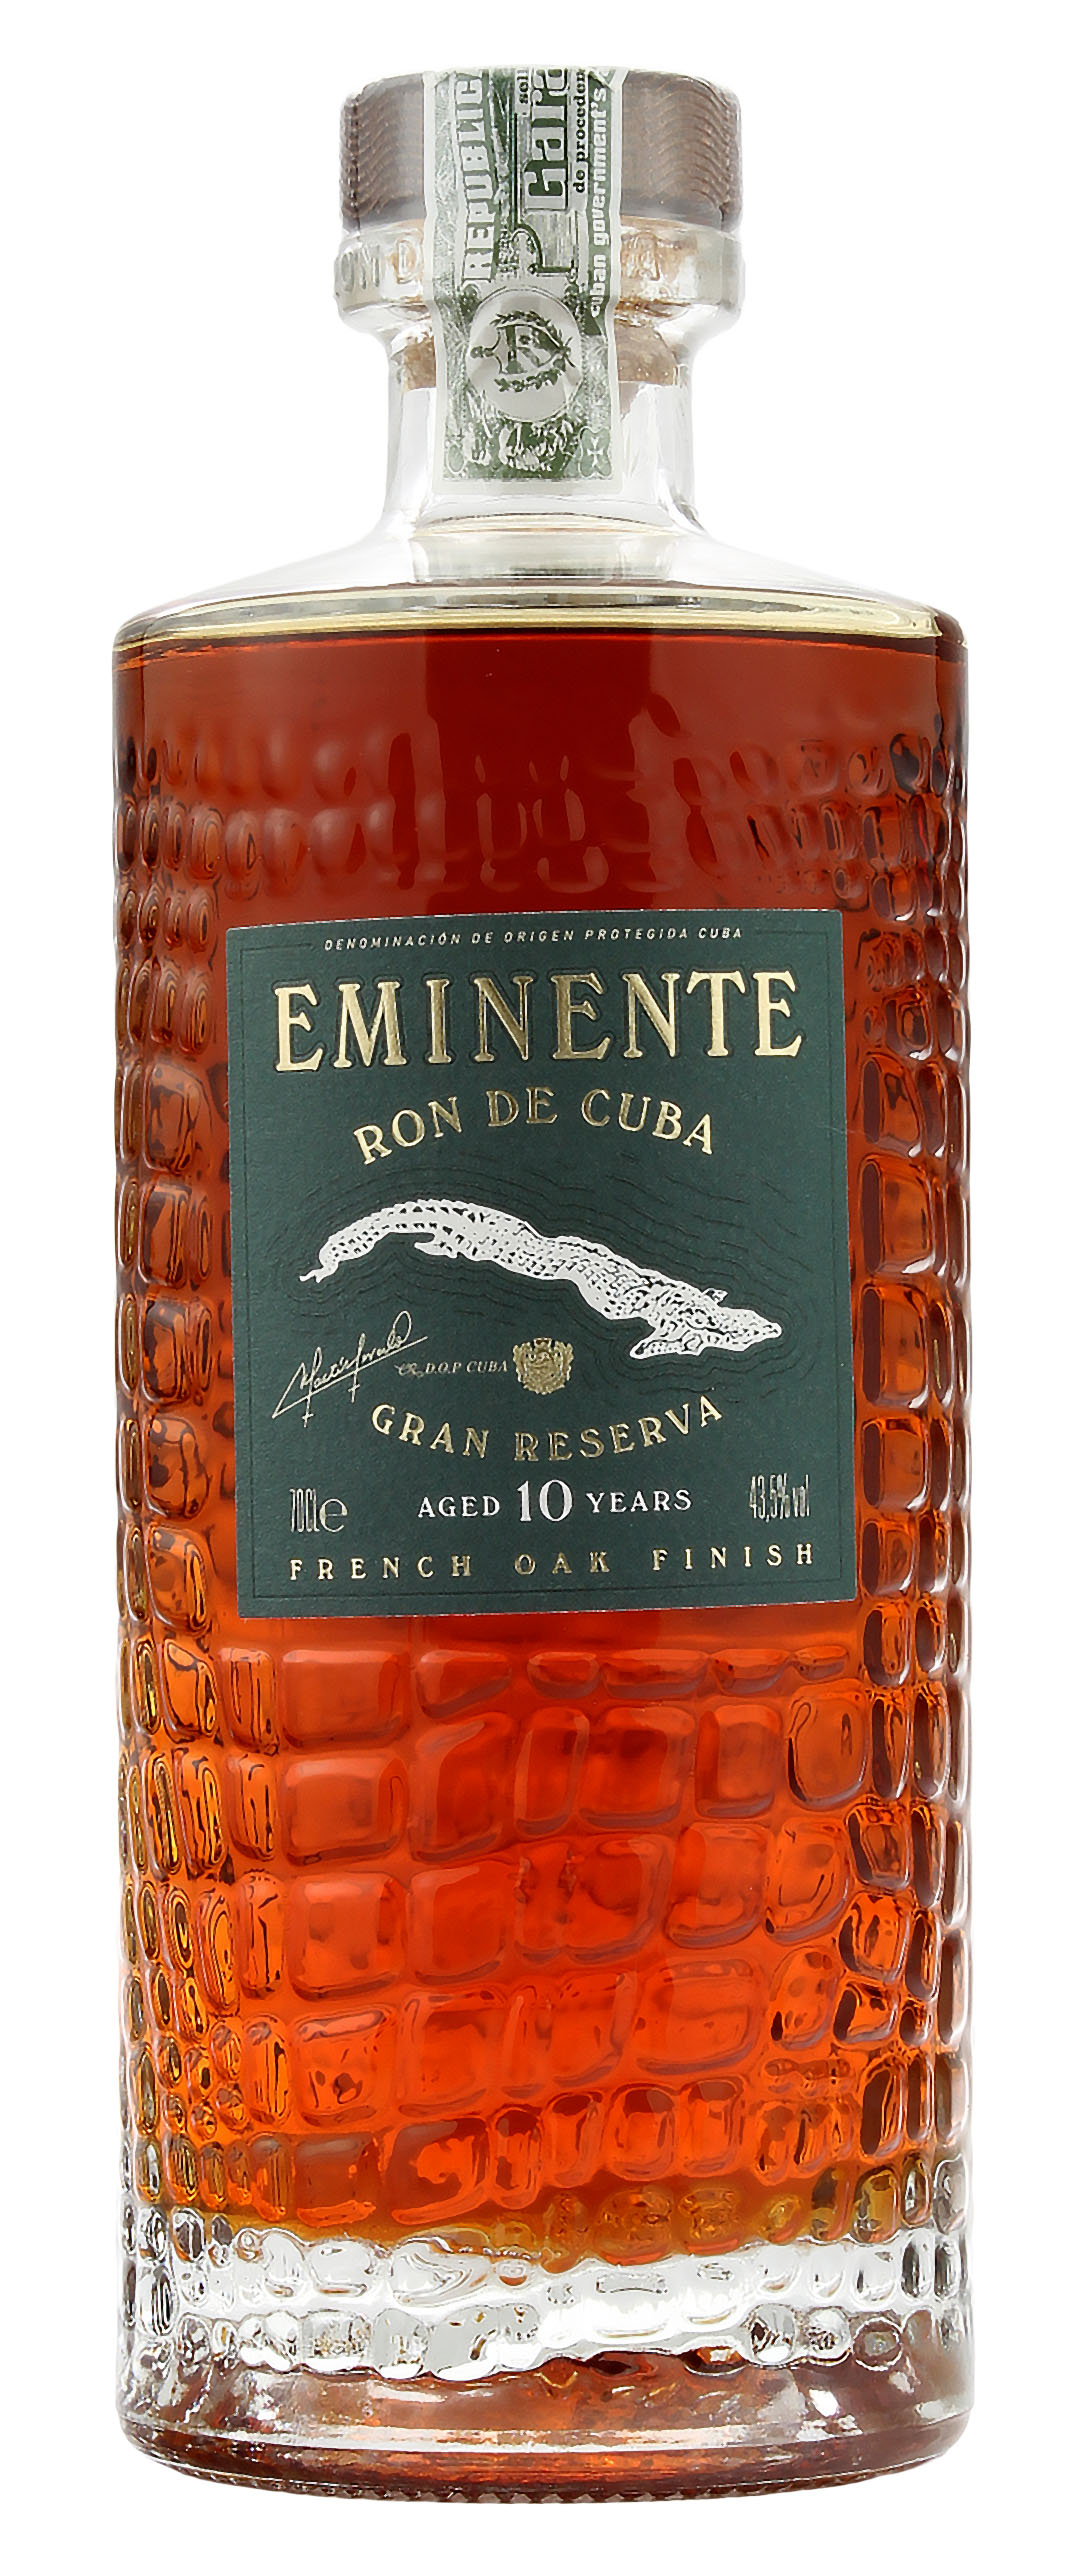 Eminente 10 Years Ron de Cuba Gran Reserva Rum 